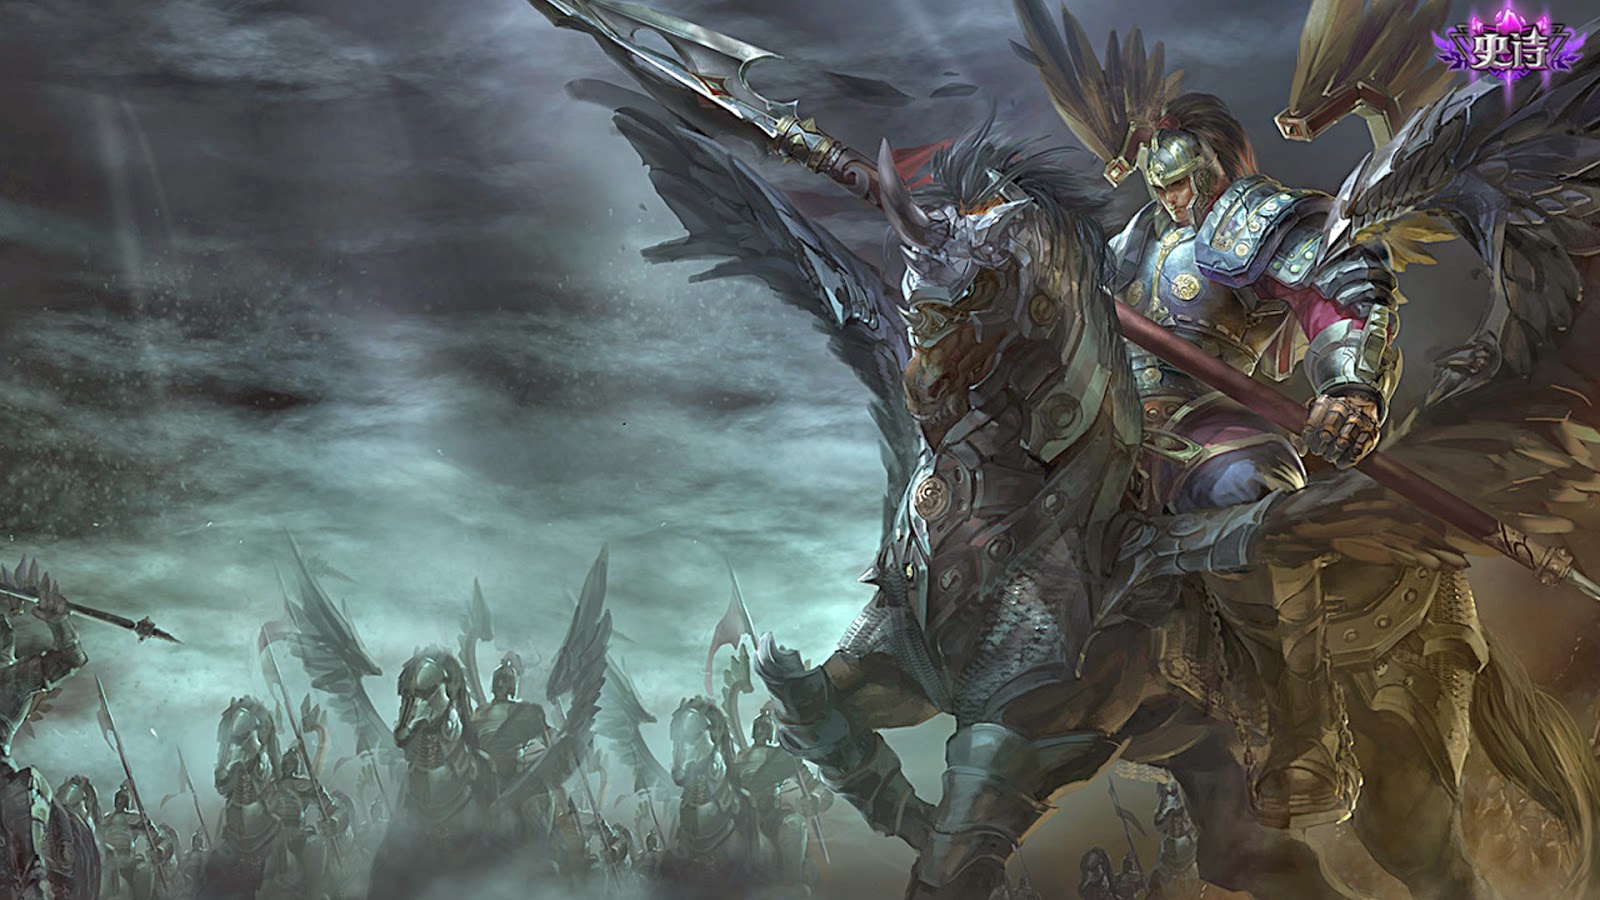 Xin Zhao League Of Legends Wallpaper Desktop